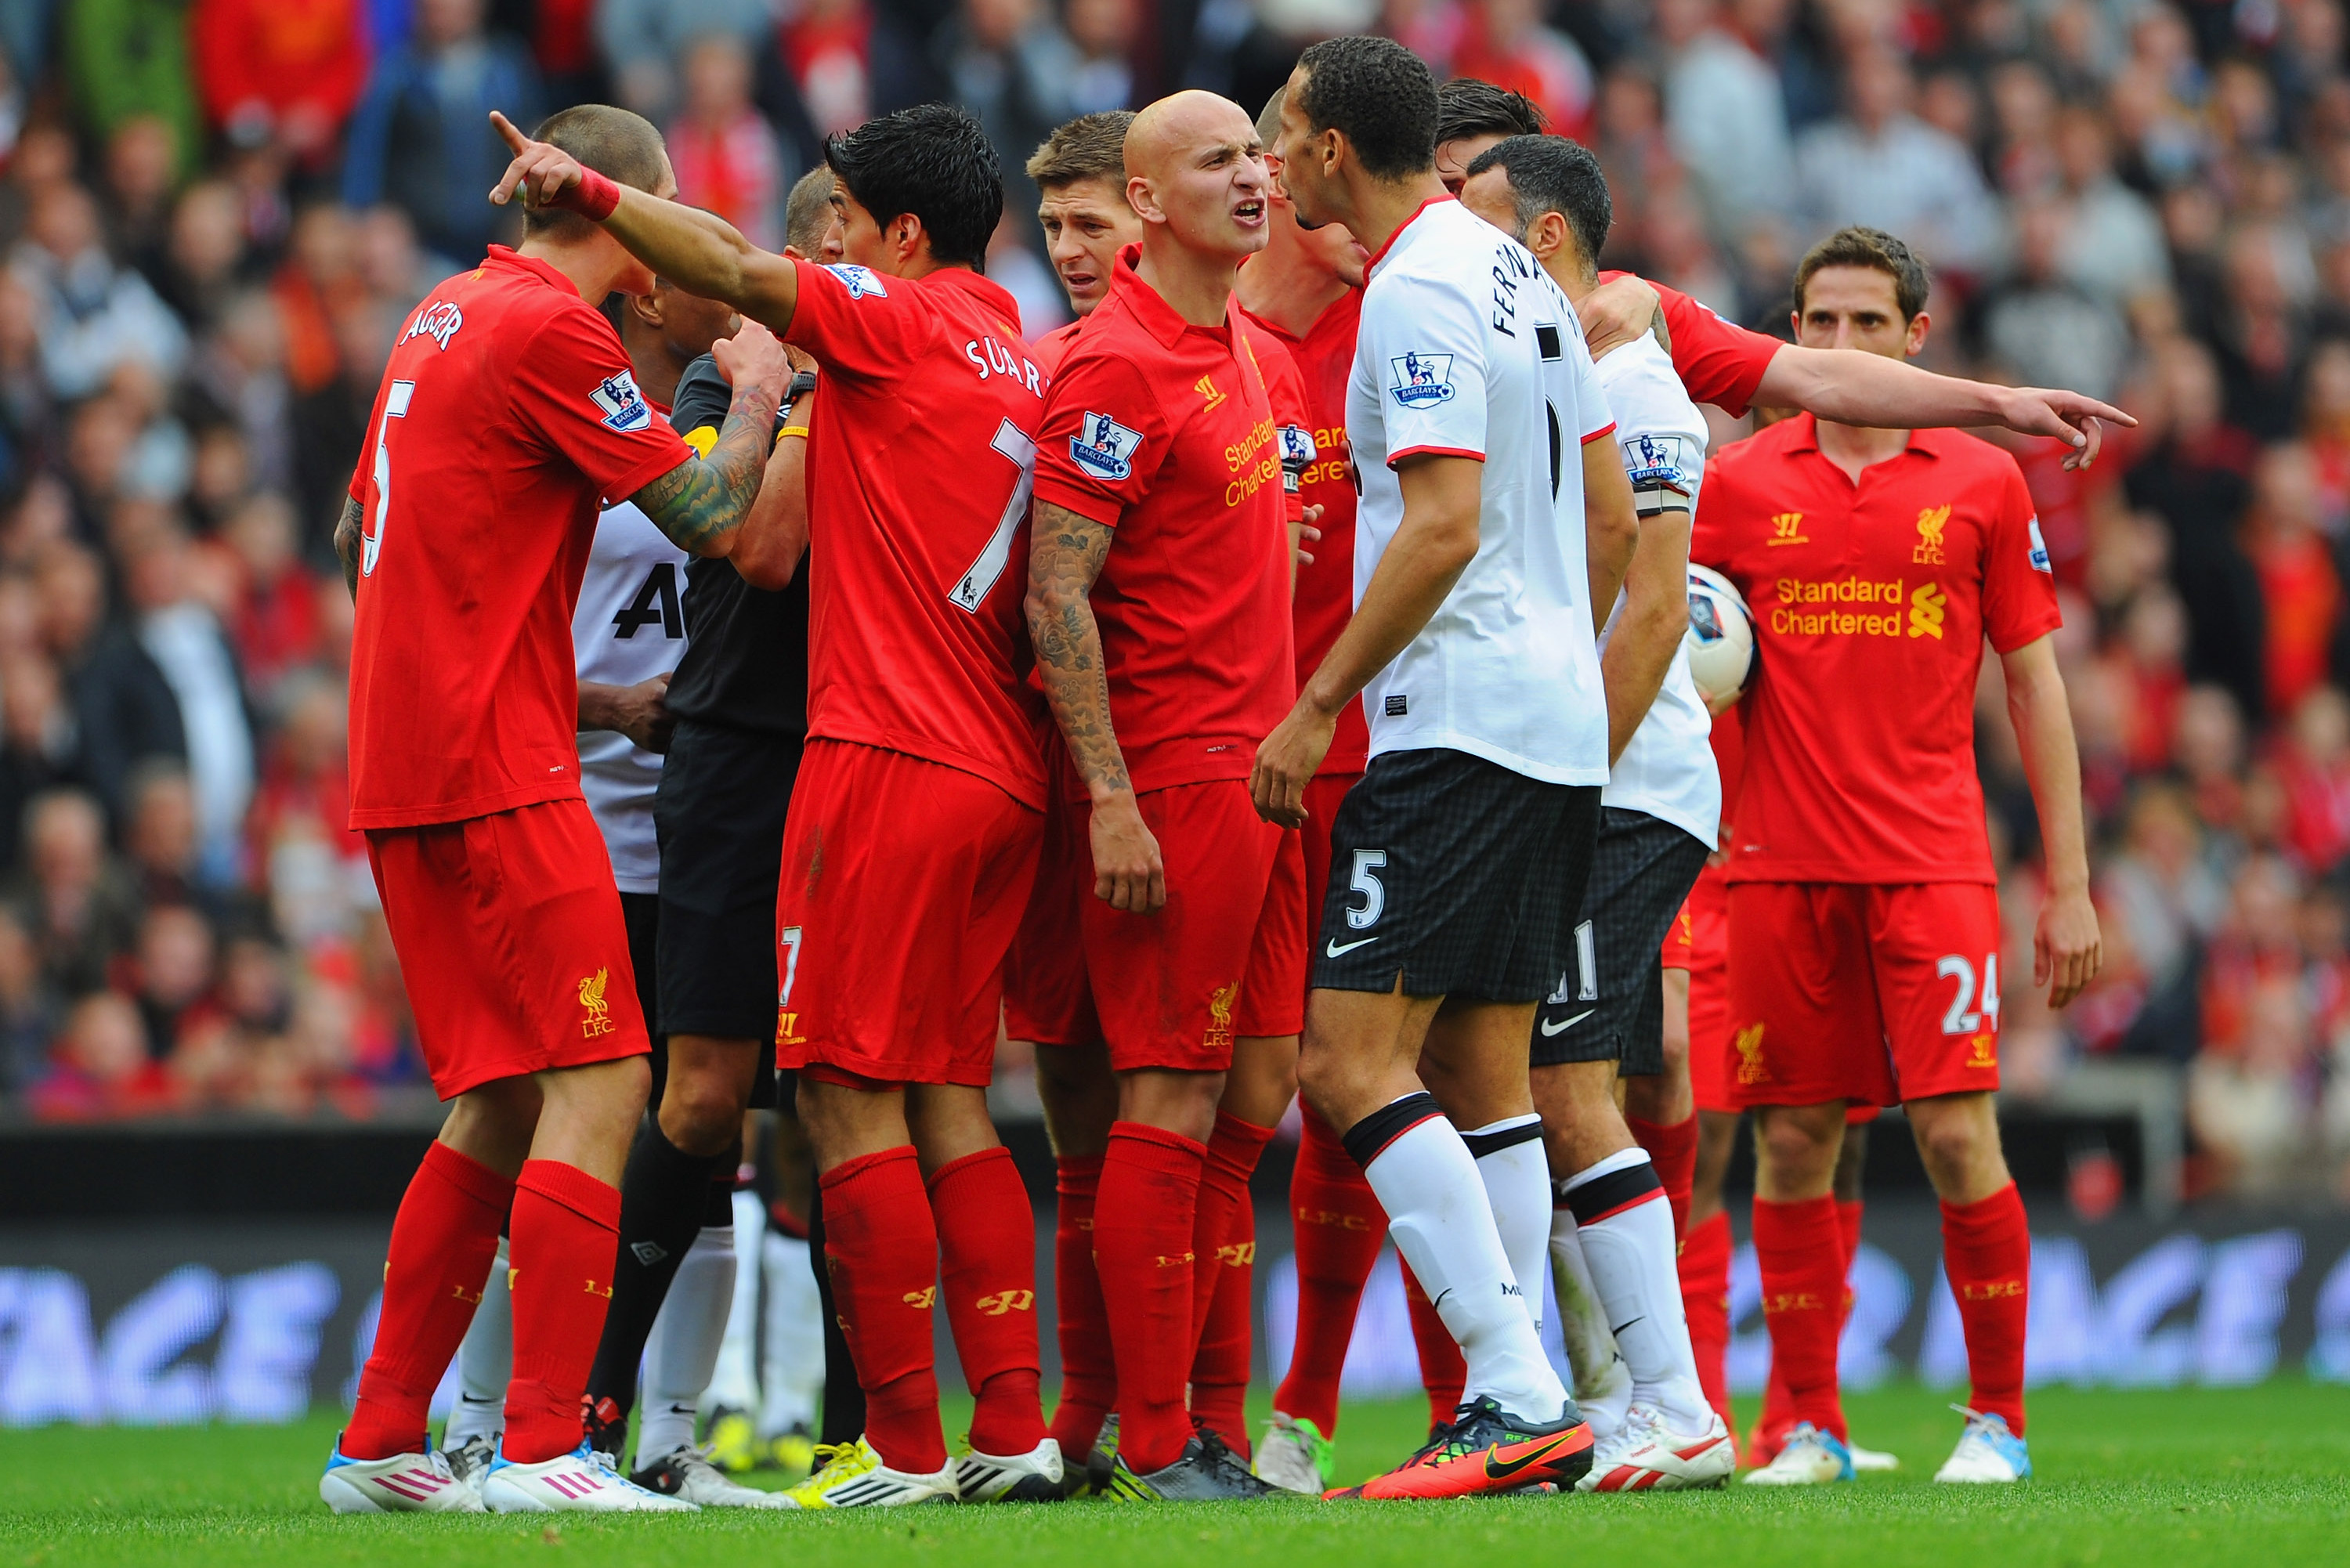 Manchester Vs Liverpool / Man Utd Vs Liverpool Live Stream Watch